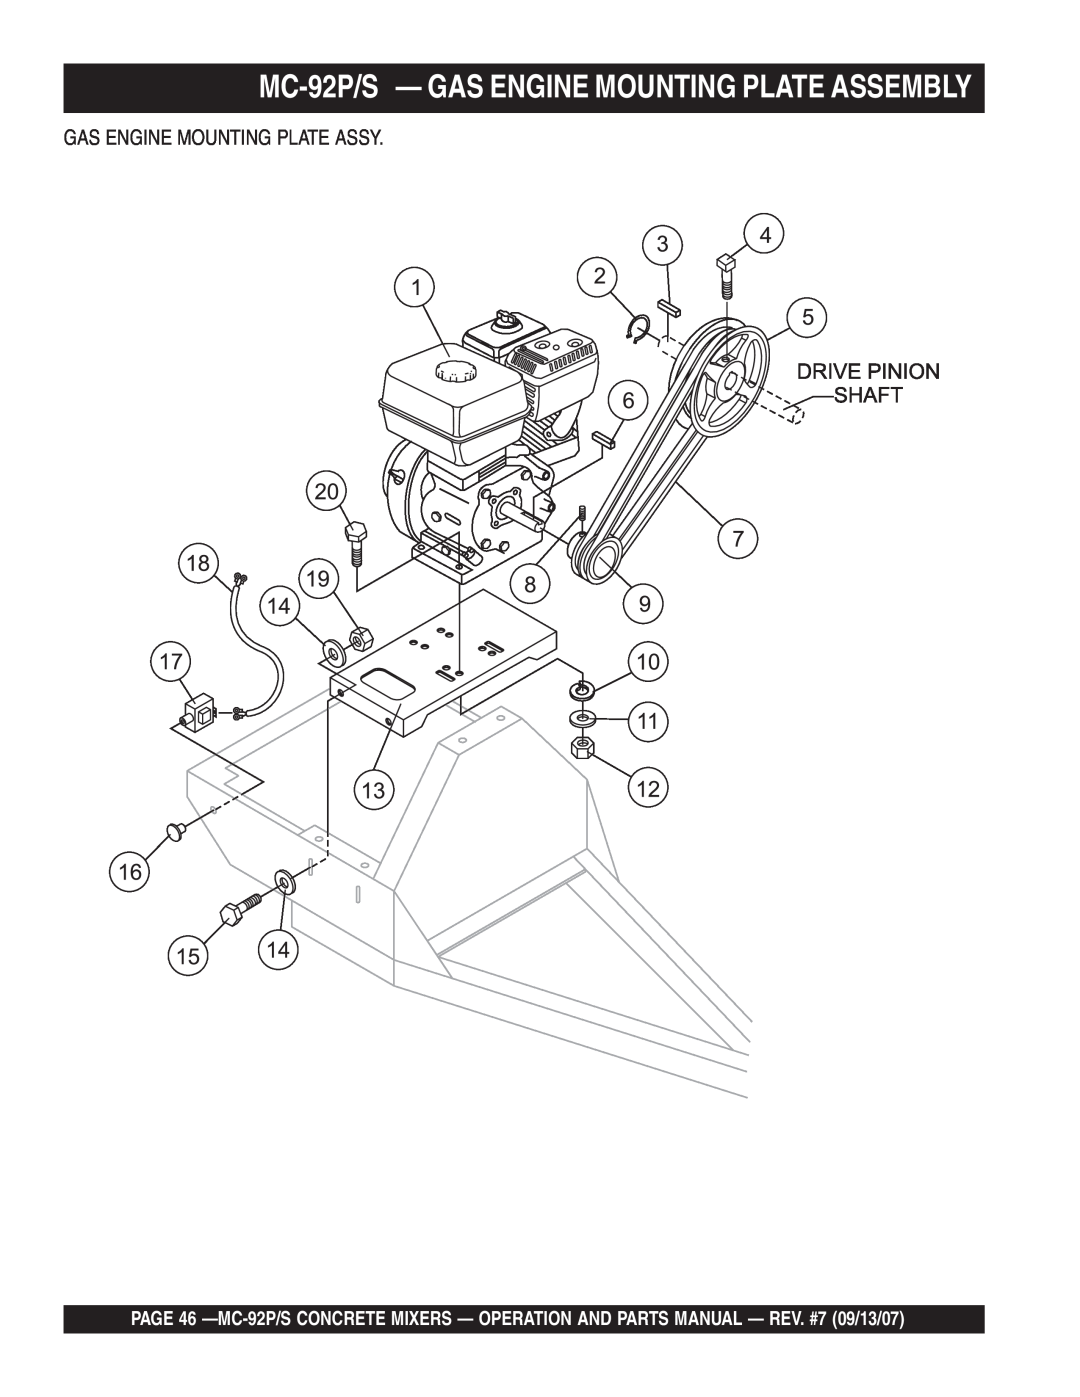 Multiquip MC-92S manual MC-92P/S - GAS ENGINE MOUNTING PLATE ASSEMBLY, Gas Engine Mounting Plate Assy 